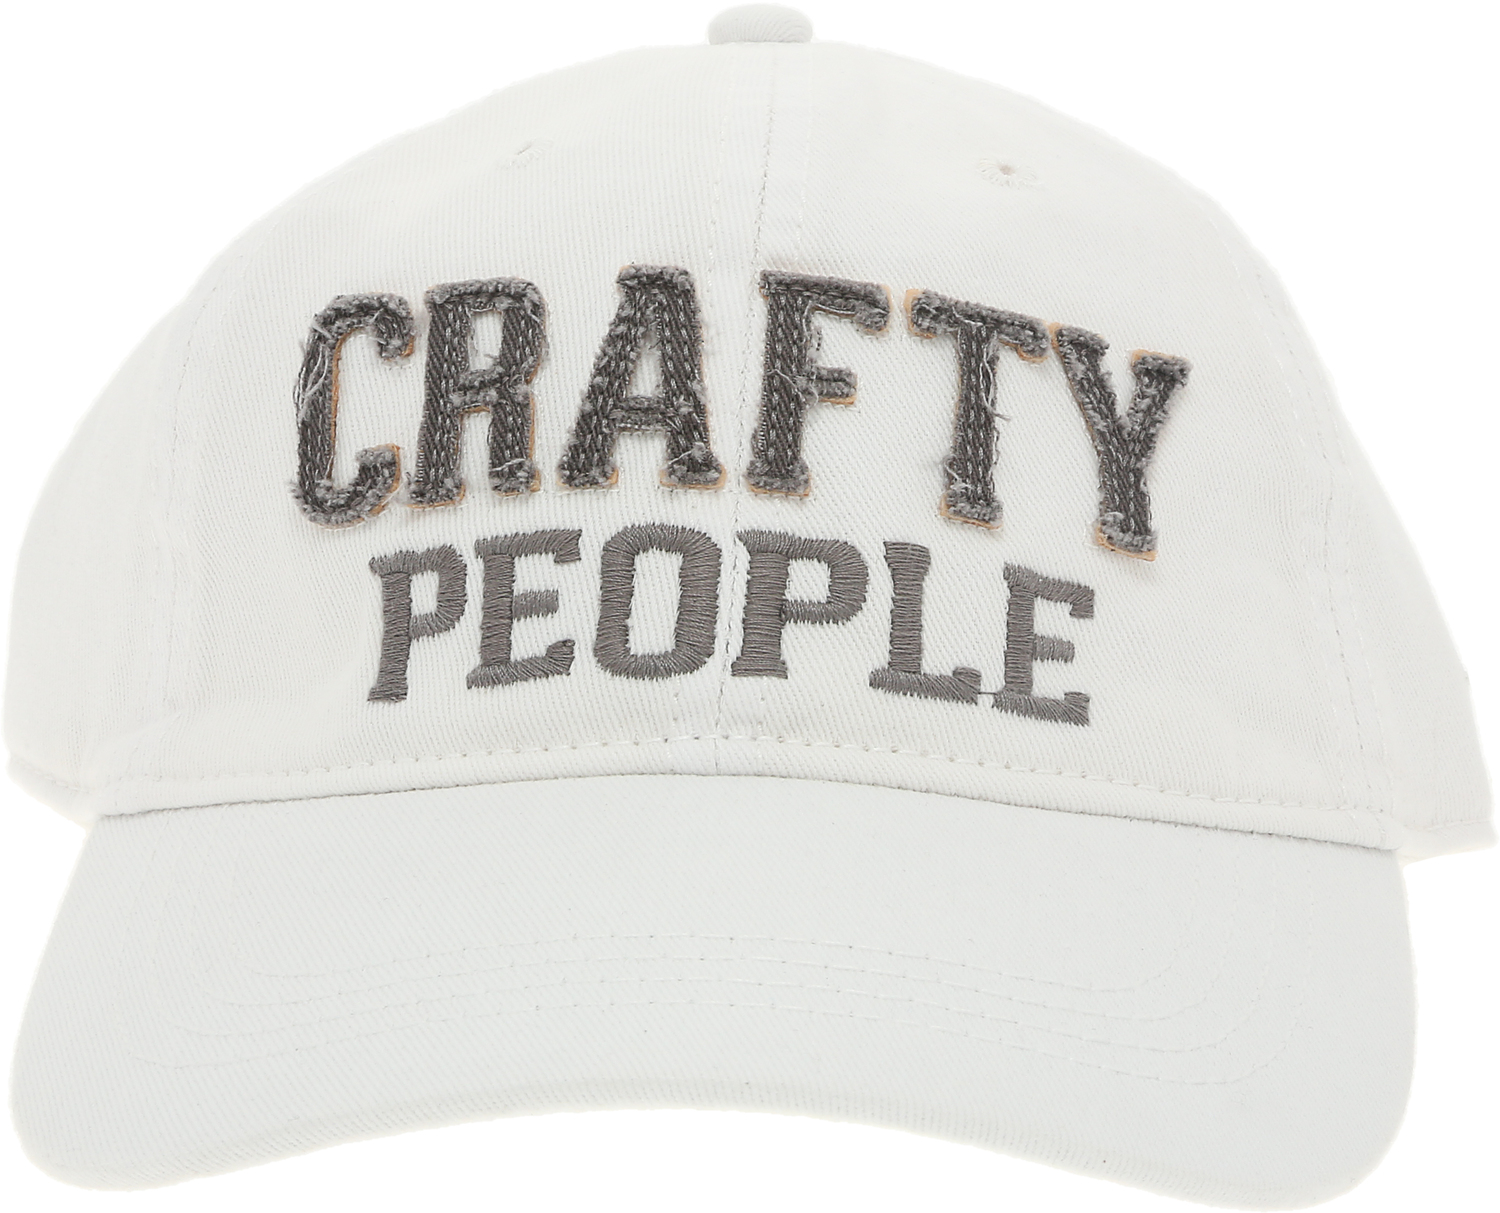 Crafty People by We People - Crafty People - White Adjustable Hat